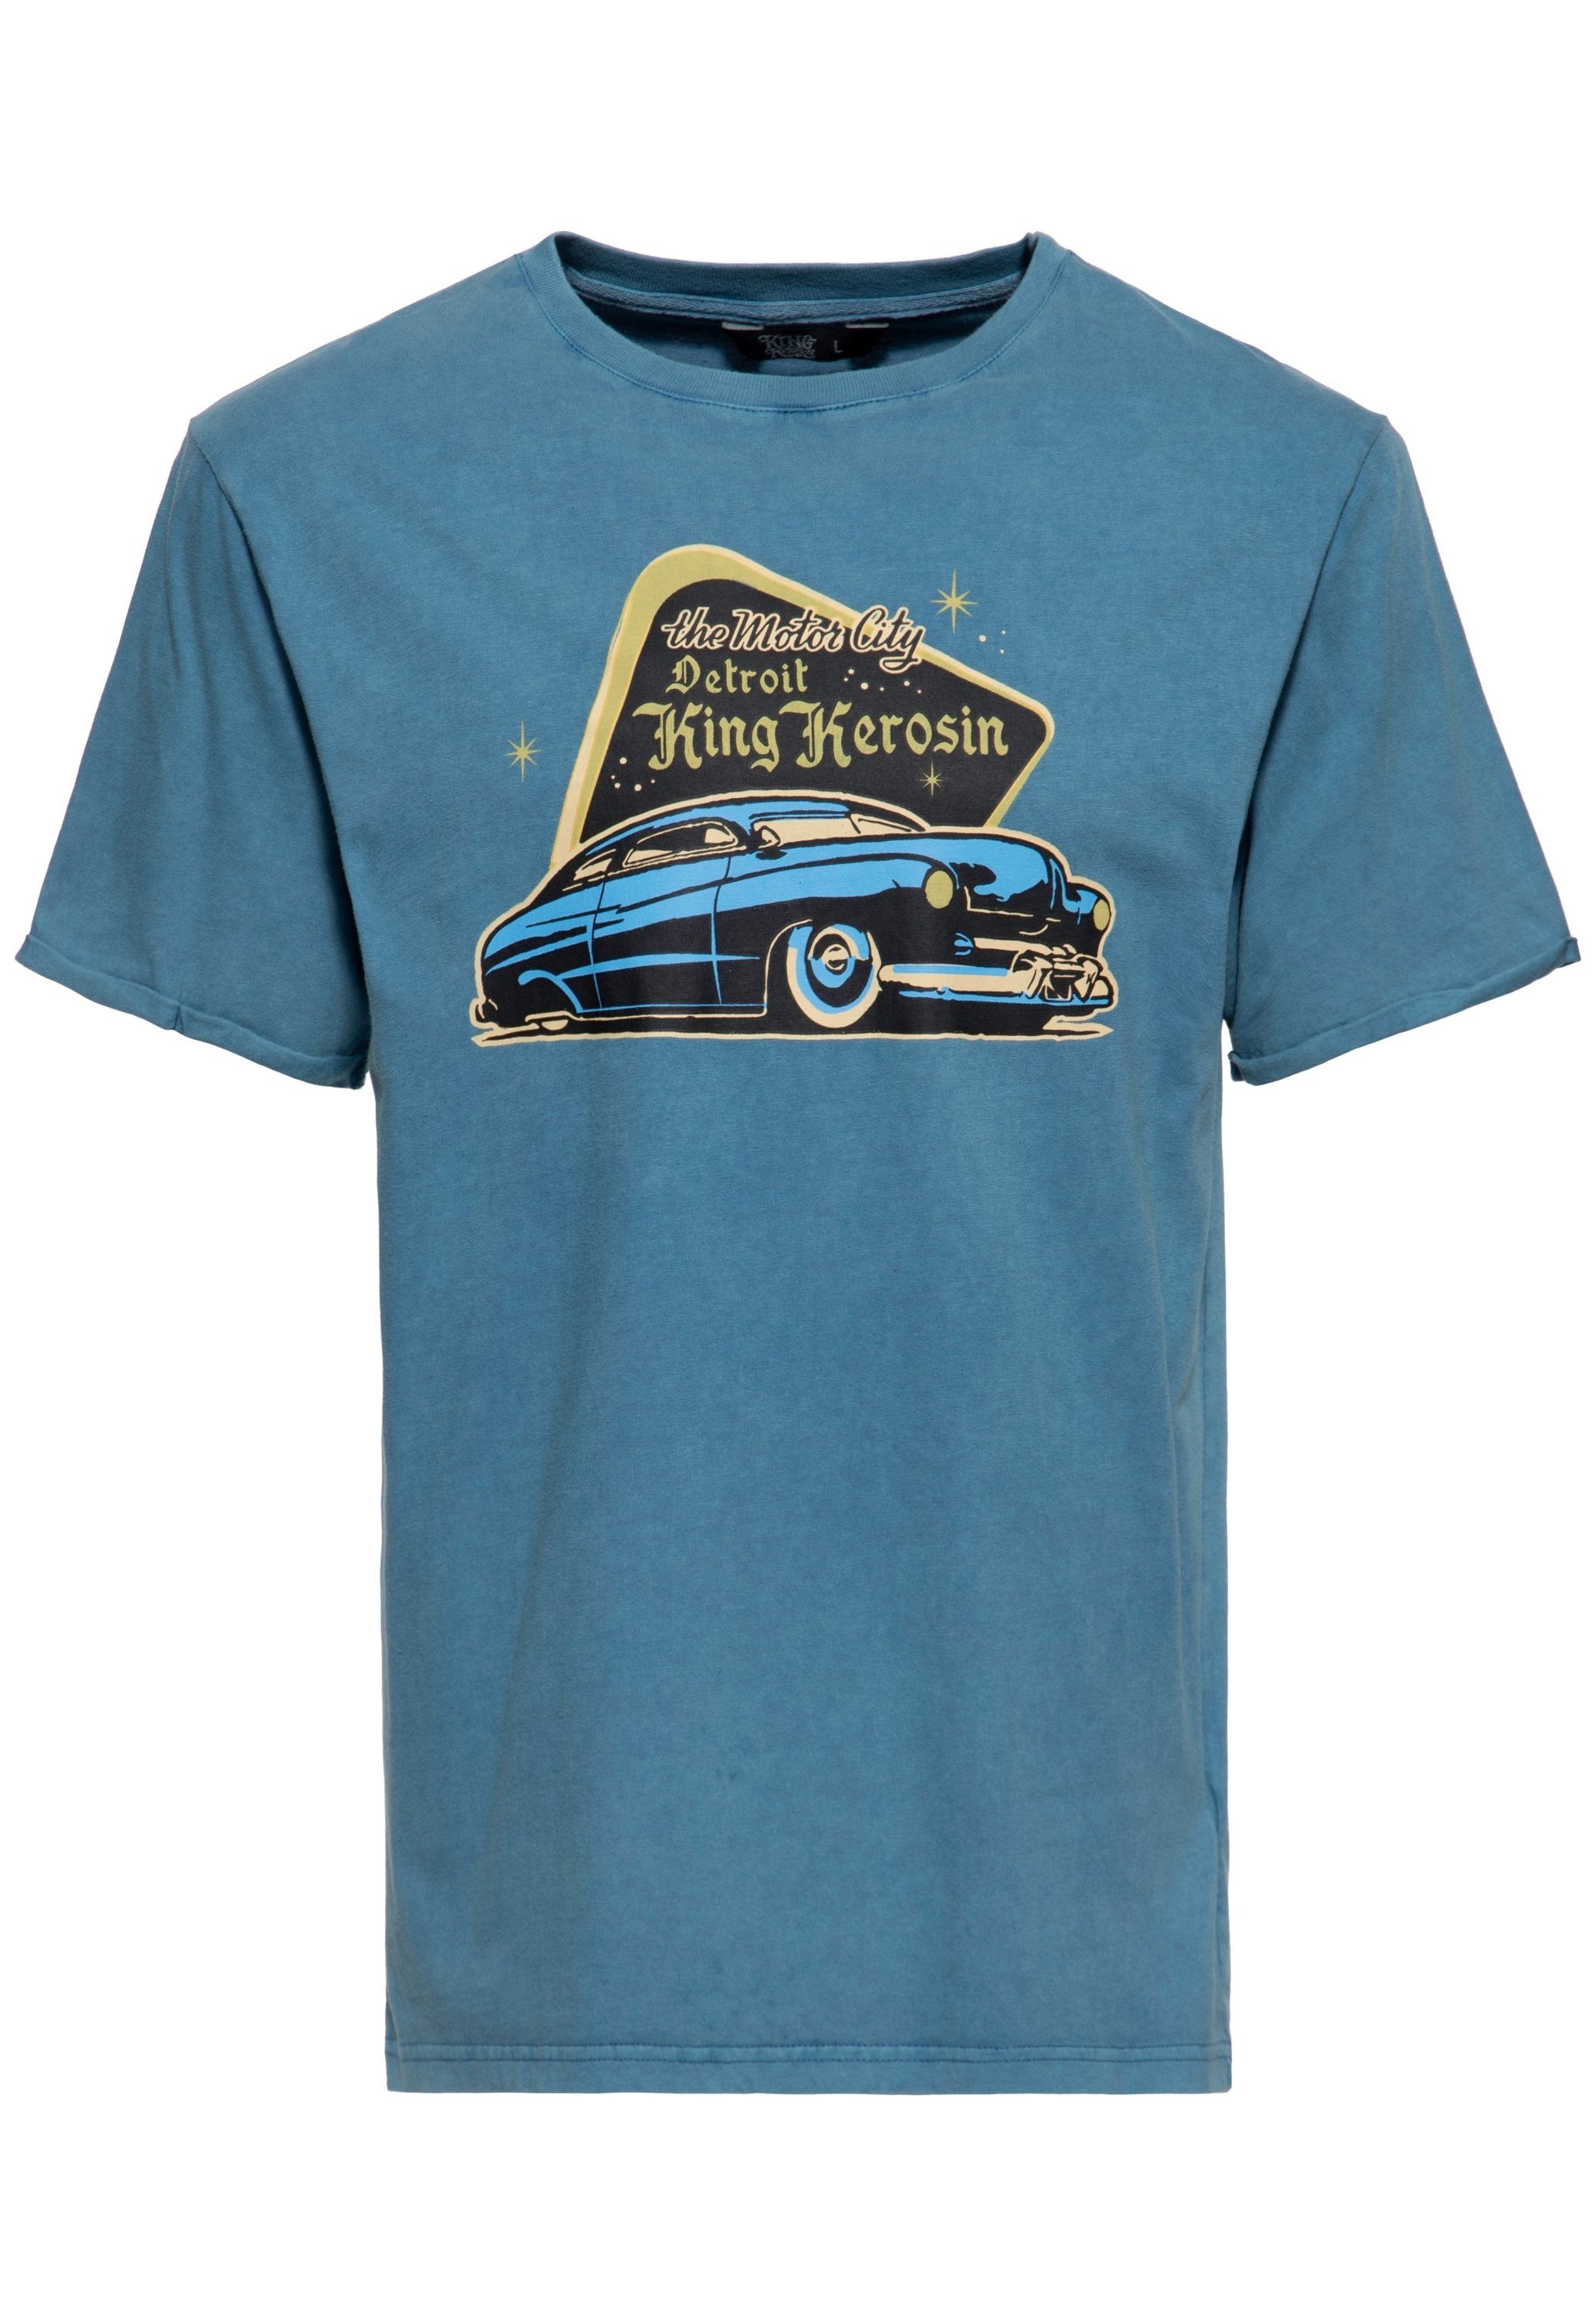 Greaser KingKerosin Print-Shirt Oil-Washed Detroit blau